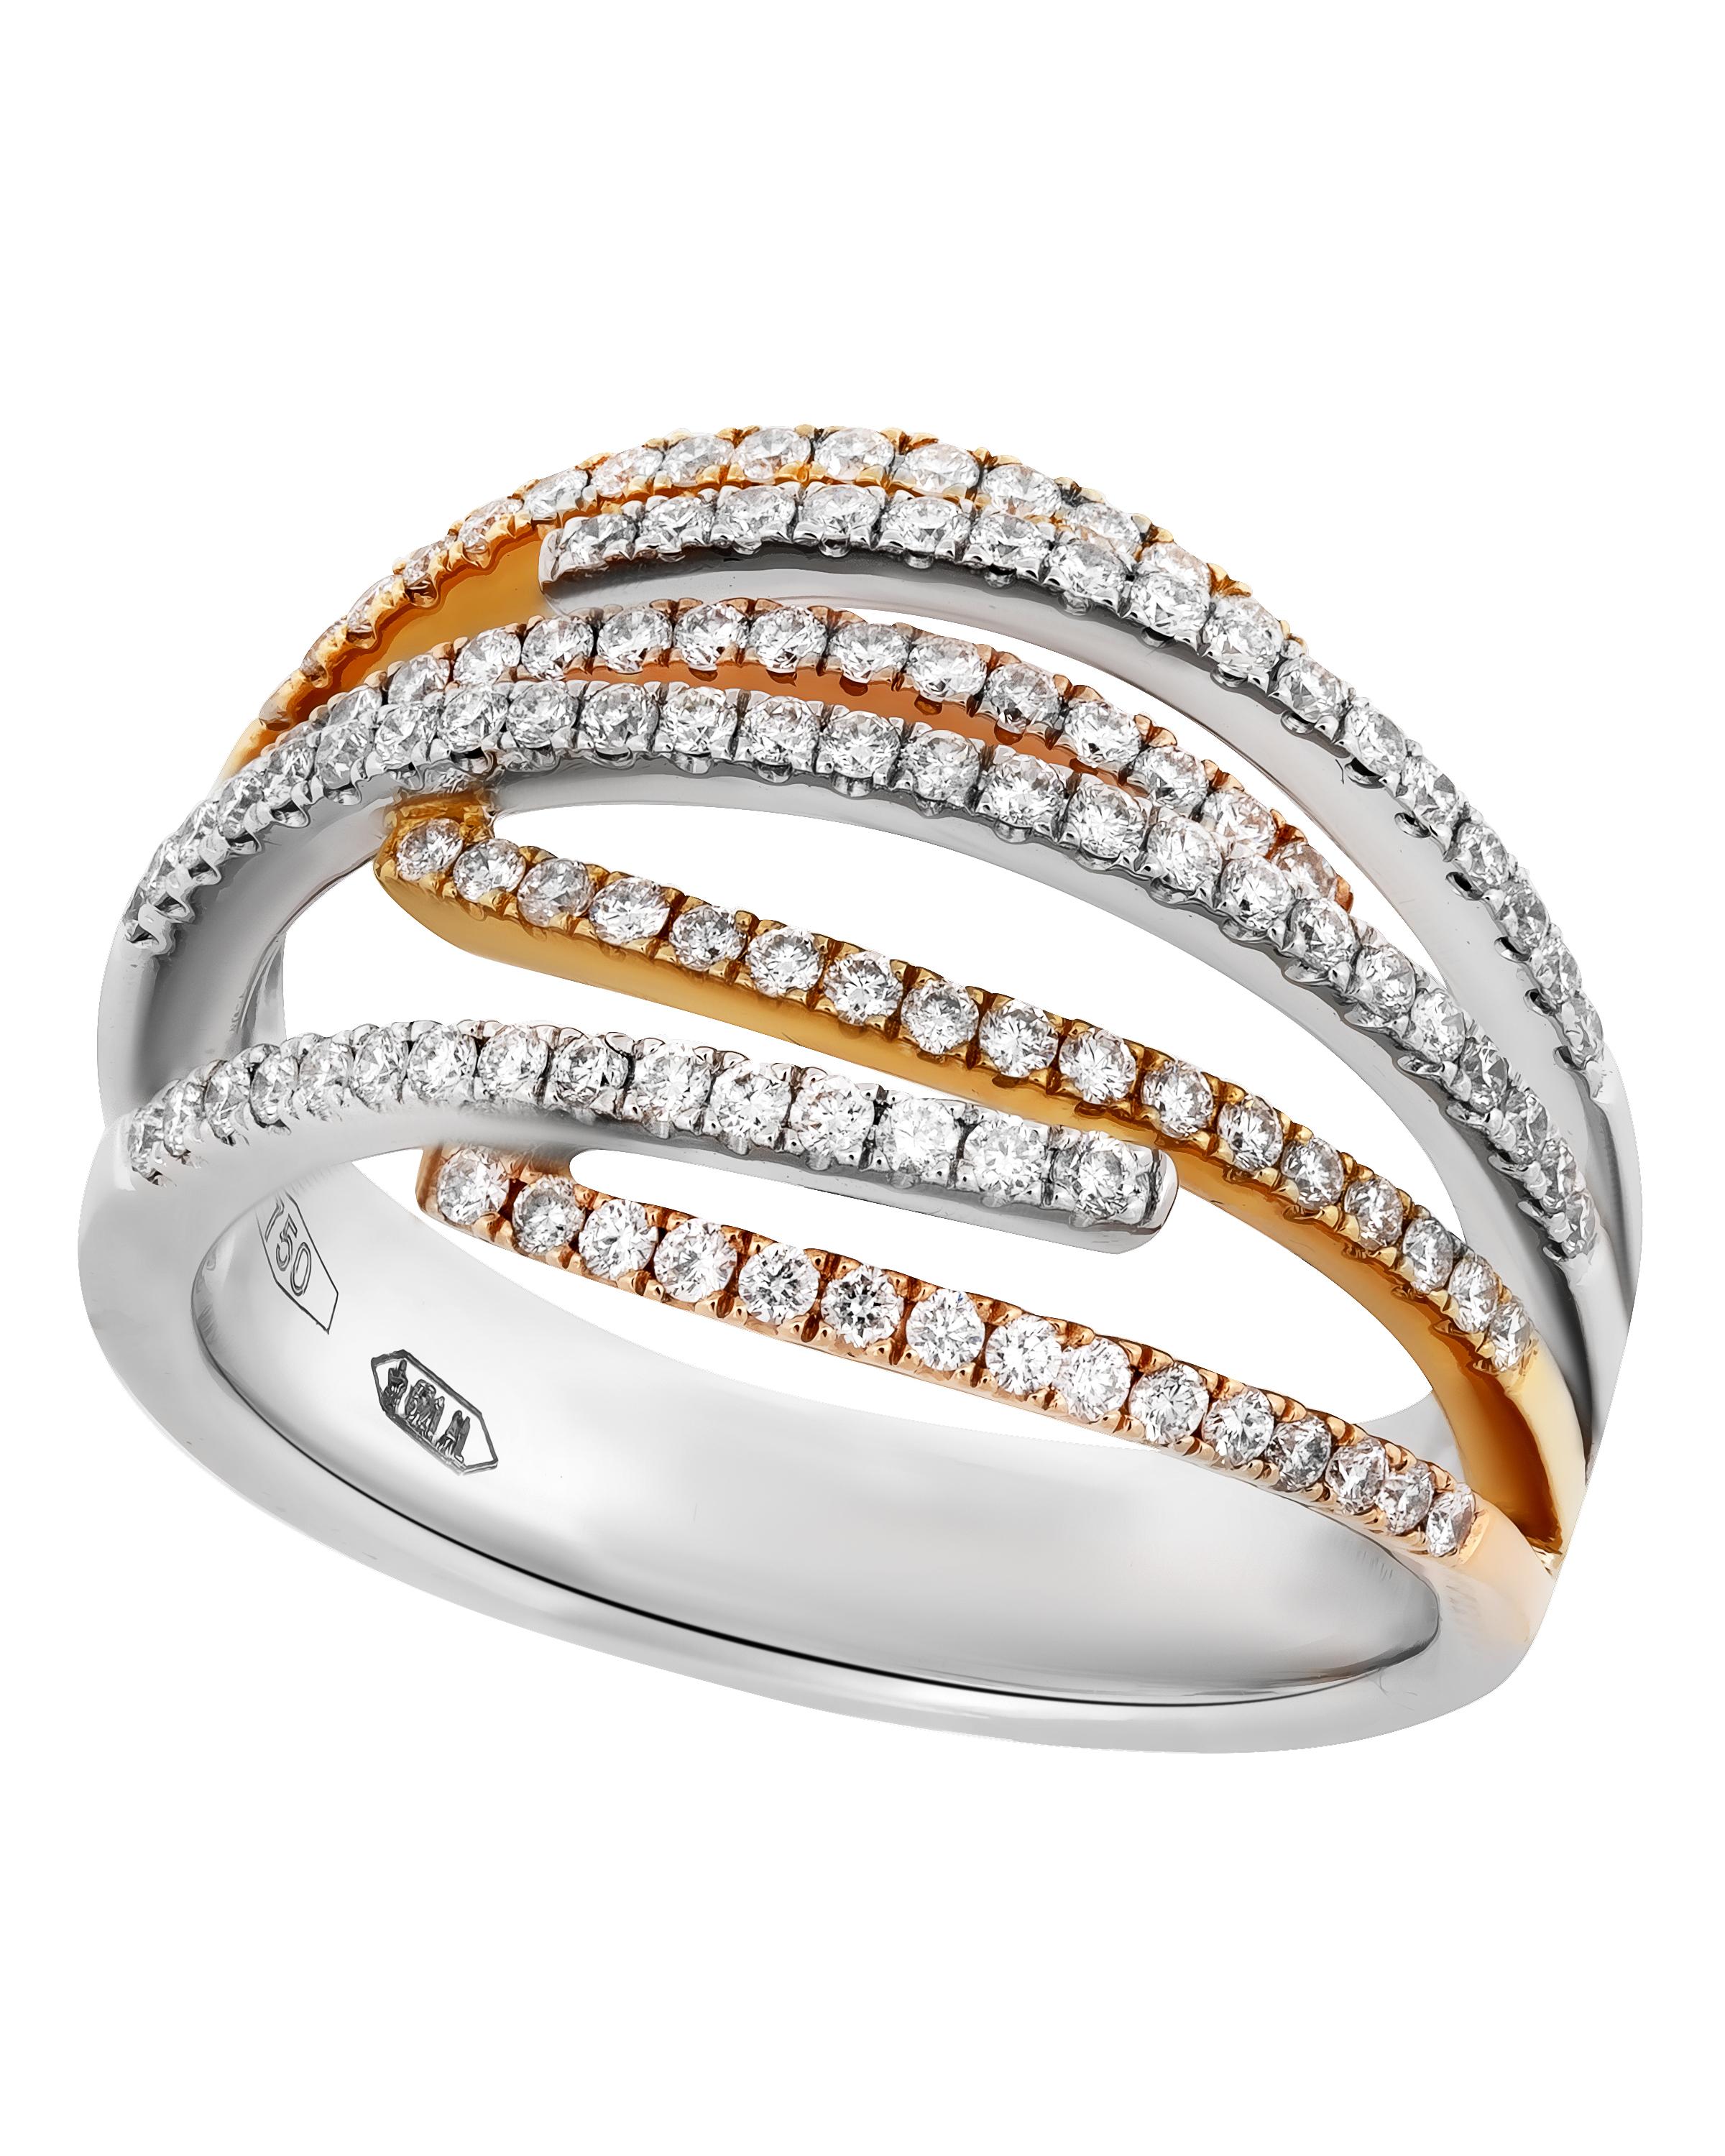 Contemporary Piero Milano 18K White, Rose & Yellow Gold Diamond Ring Sz 6.75 For Sale